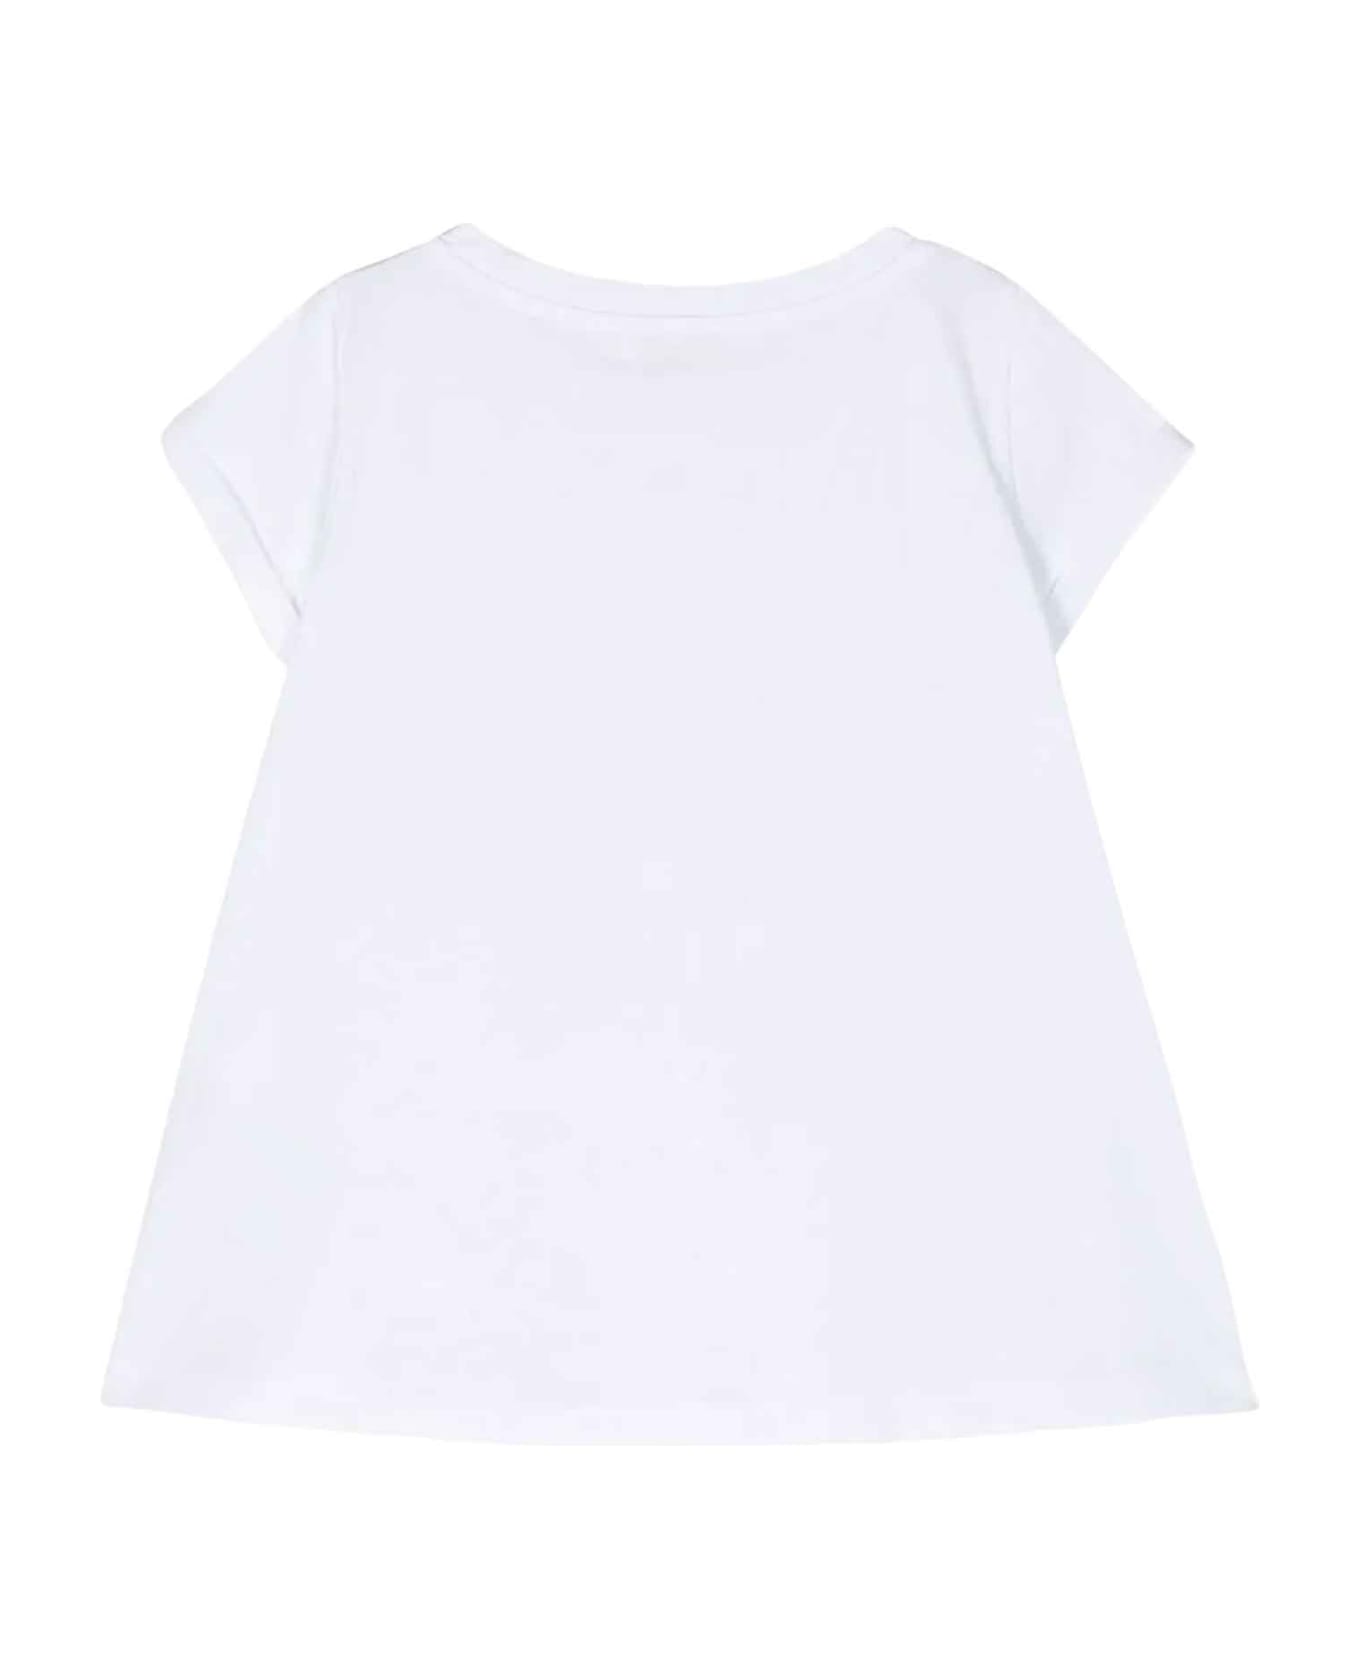 Monnalisa White T-shirt Girl - C